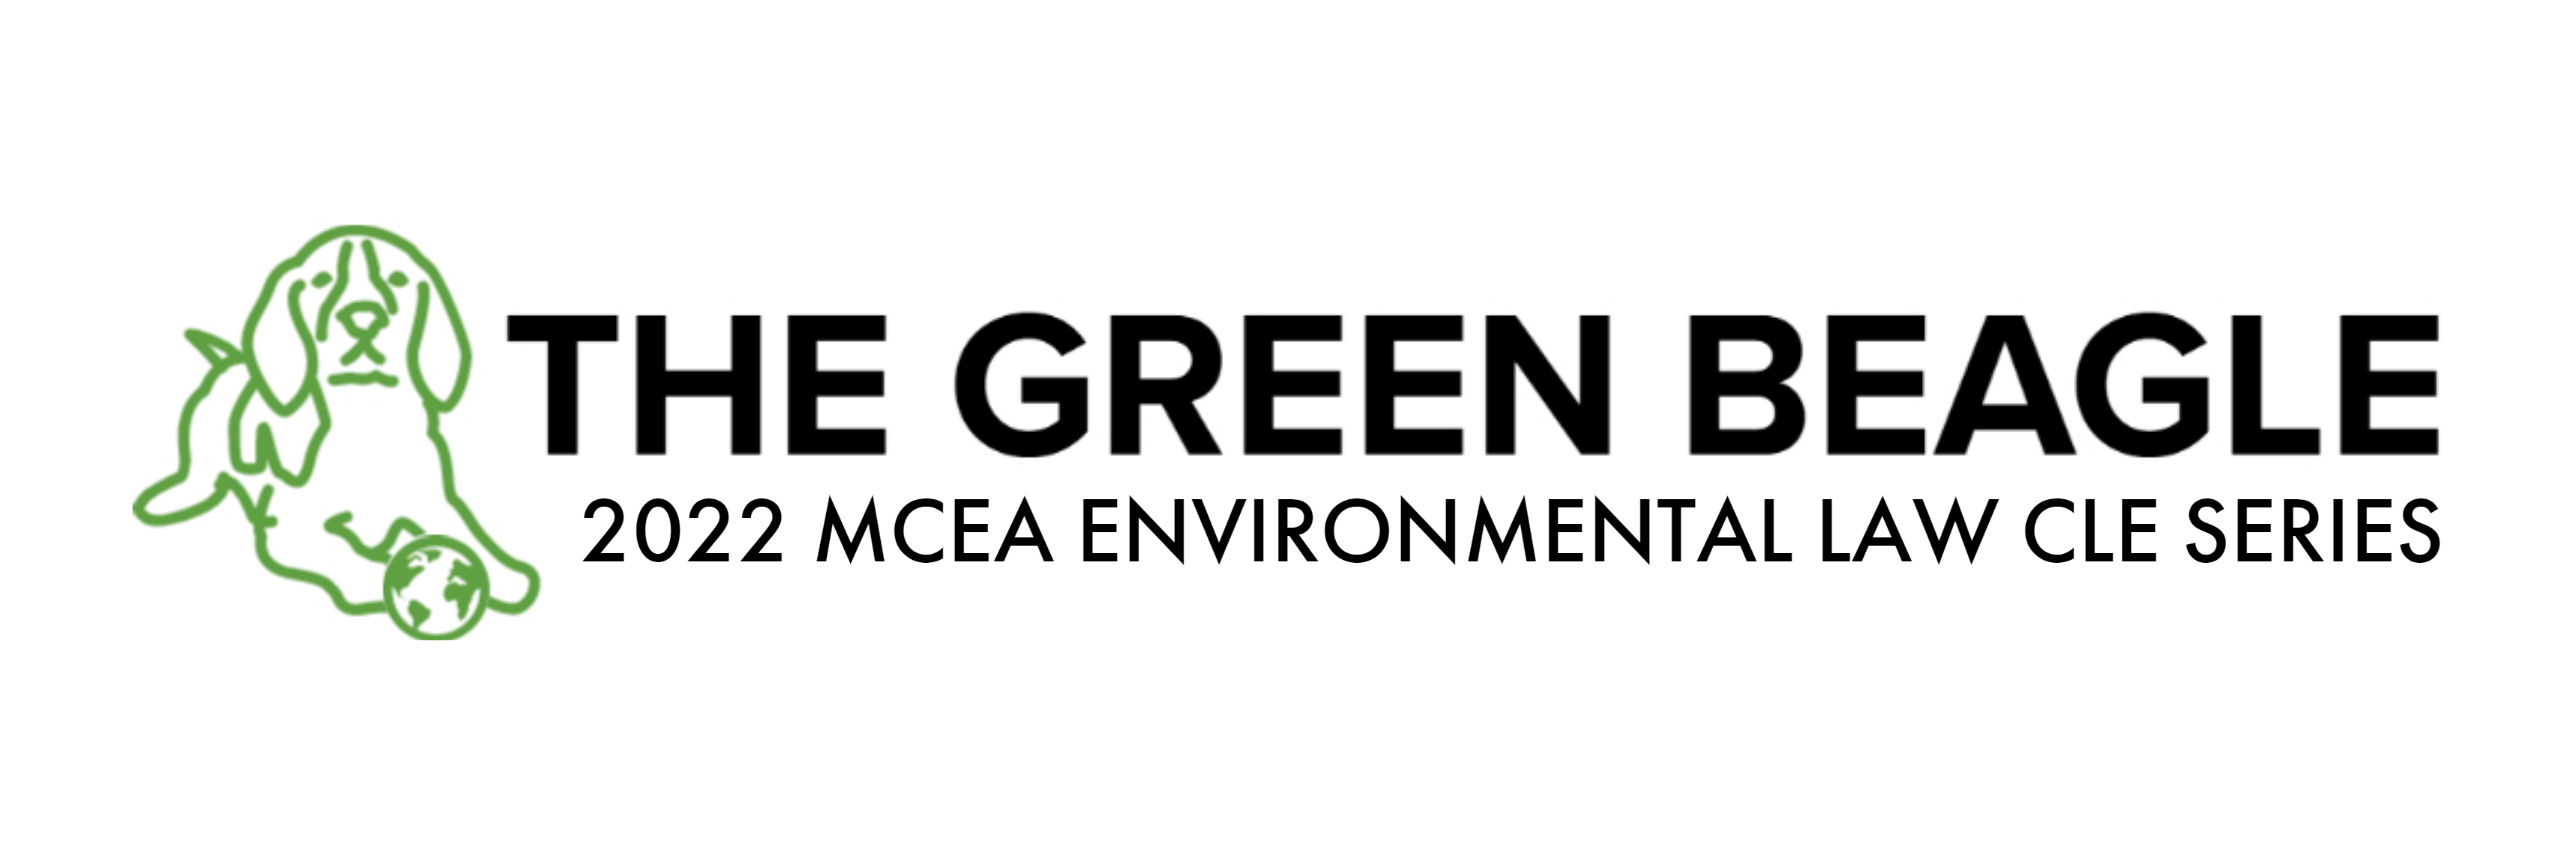 2022 MCEA Green Beagle Environmental Law CLE